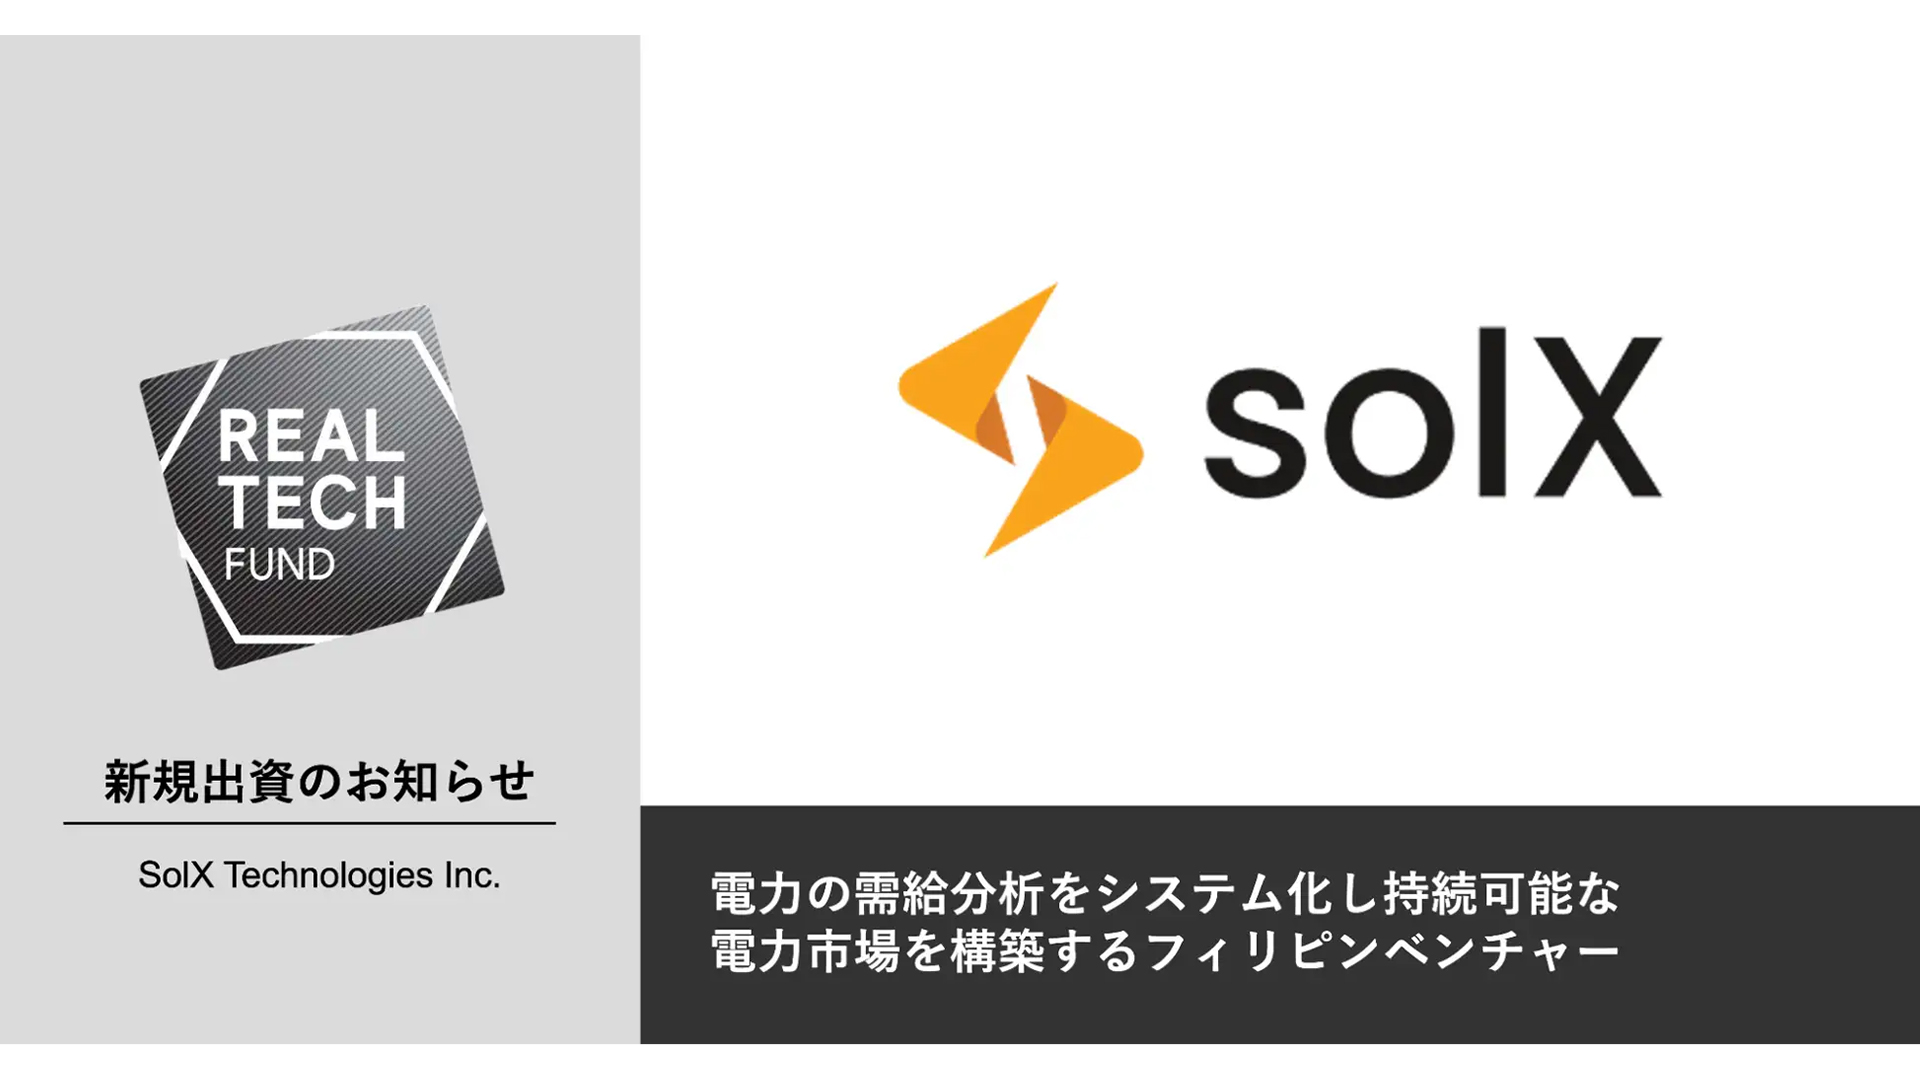 SOLX Technologies Pte Ltdがリアルテックホールディングス株式会社から資金調達